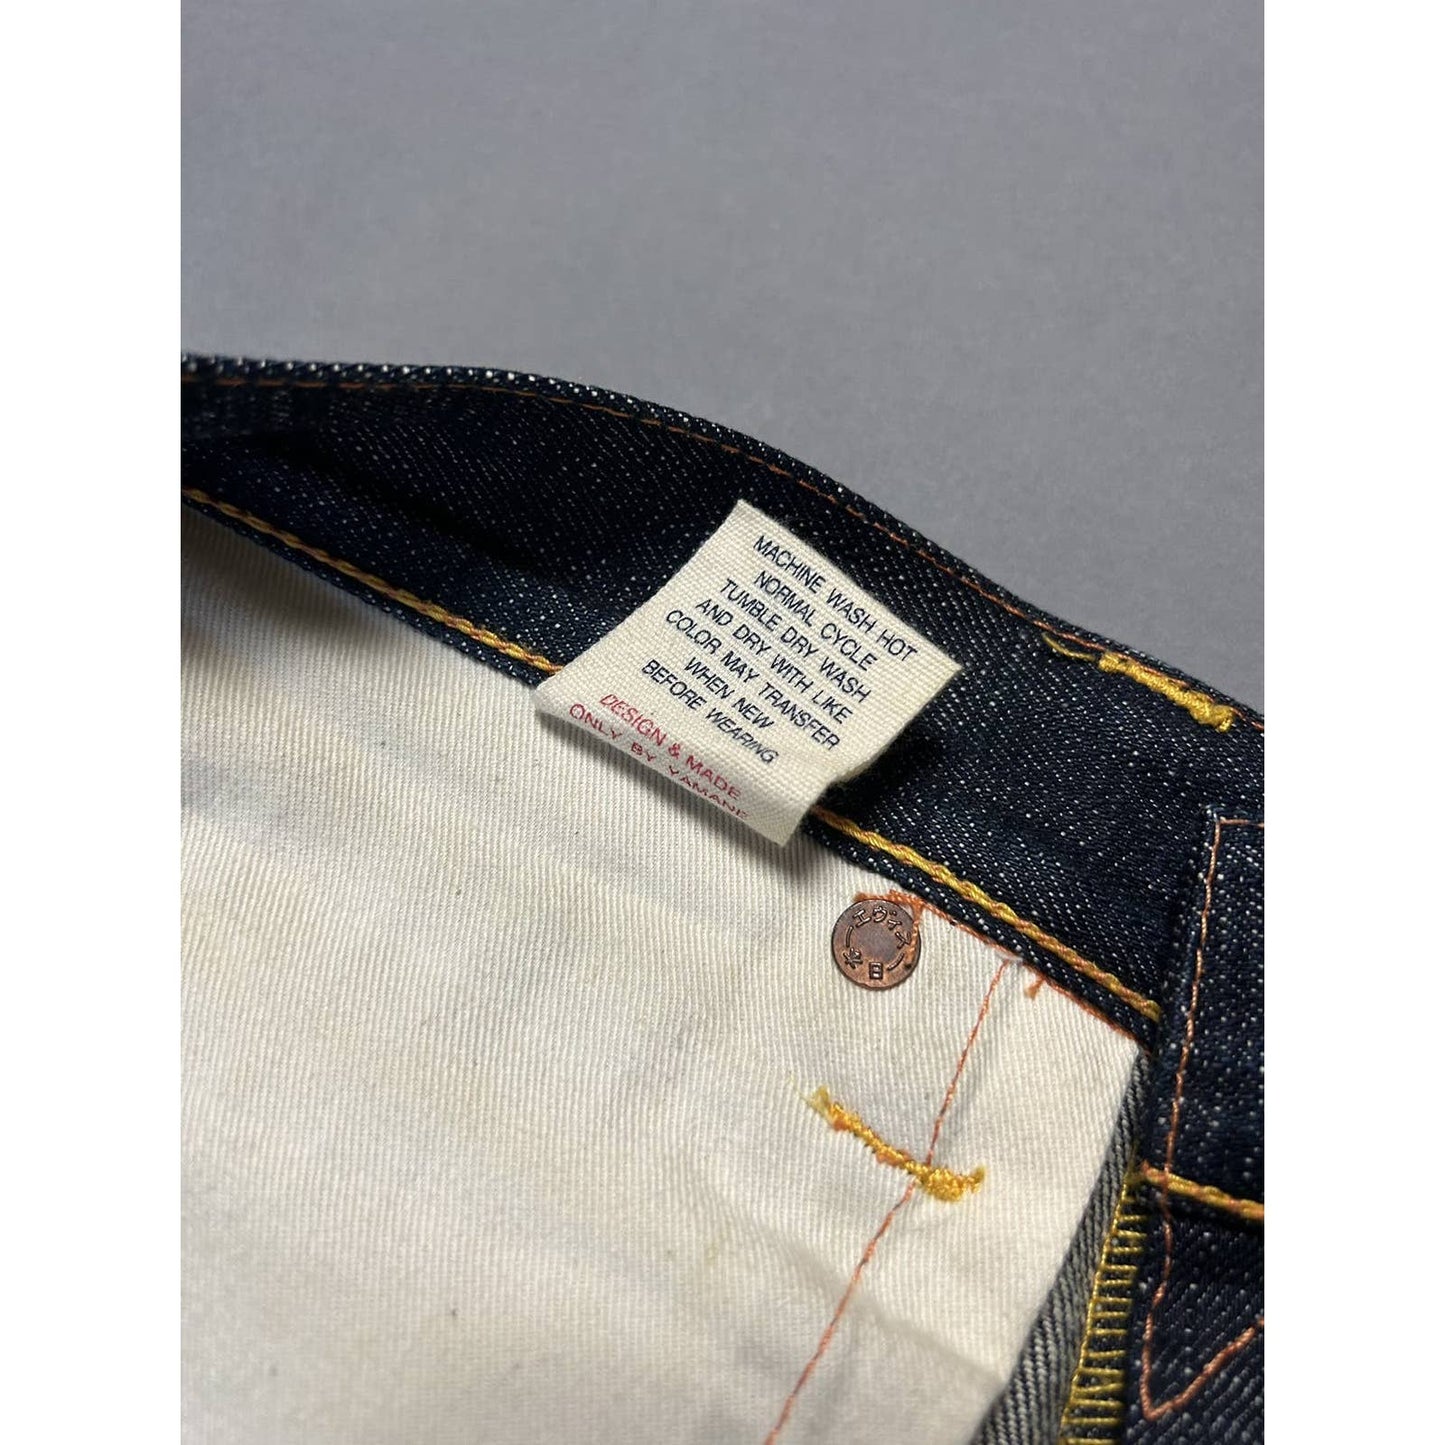 Evisu Japan vintage selvedge daicock jeans yellow big logo